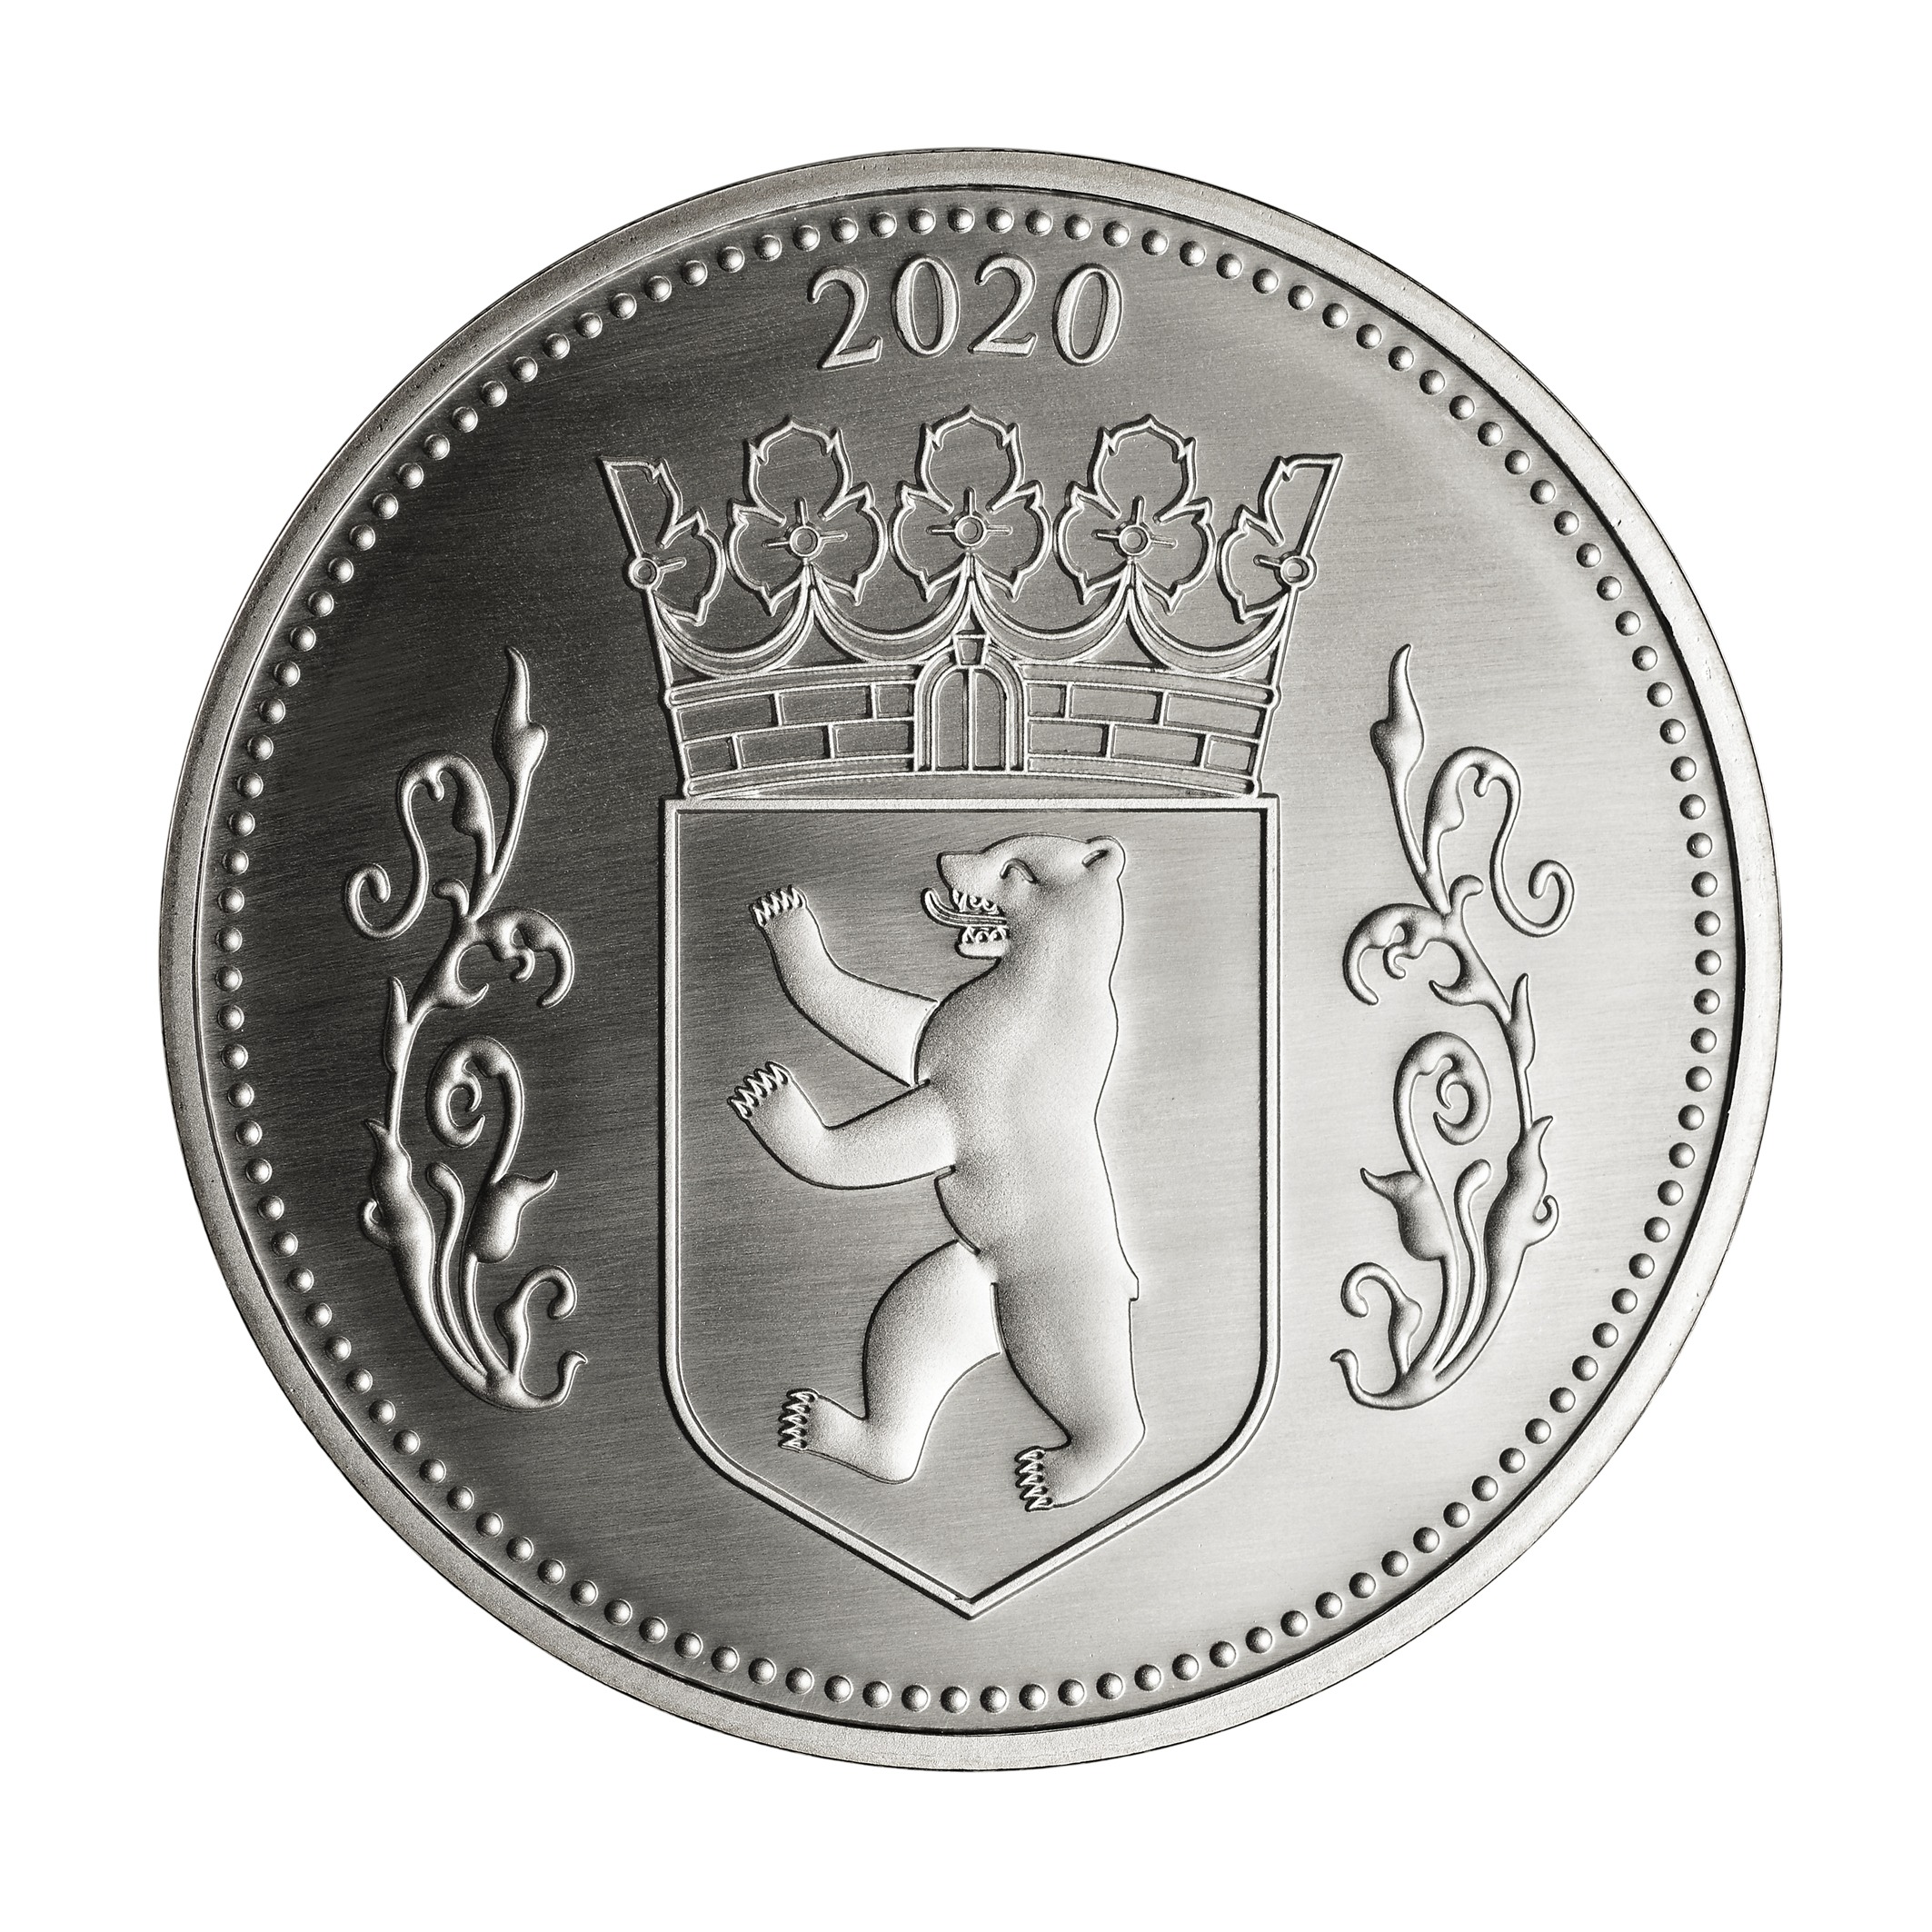 DE Medaille 2020 No mintmark